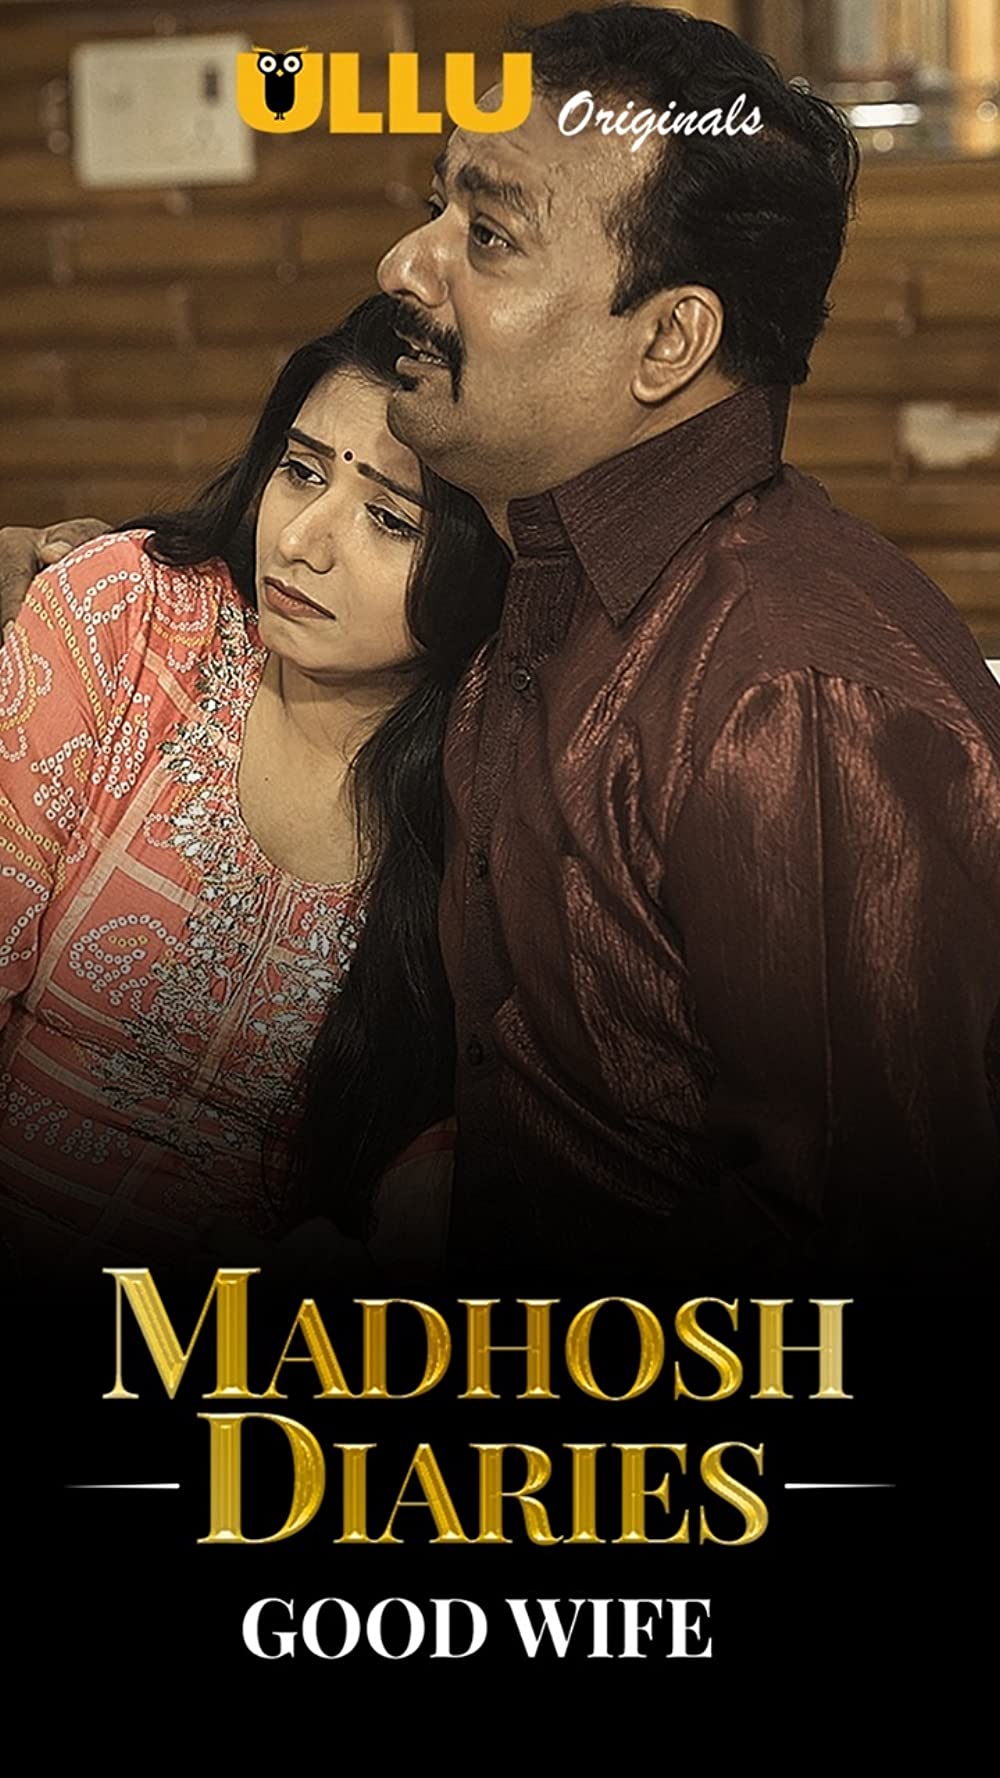 Download Madhosh Diaries (Good Wife) Hindi Ullu Web Series 720p HDRip 130MB